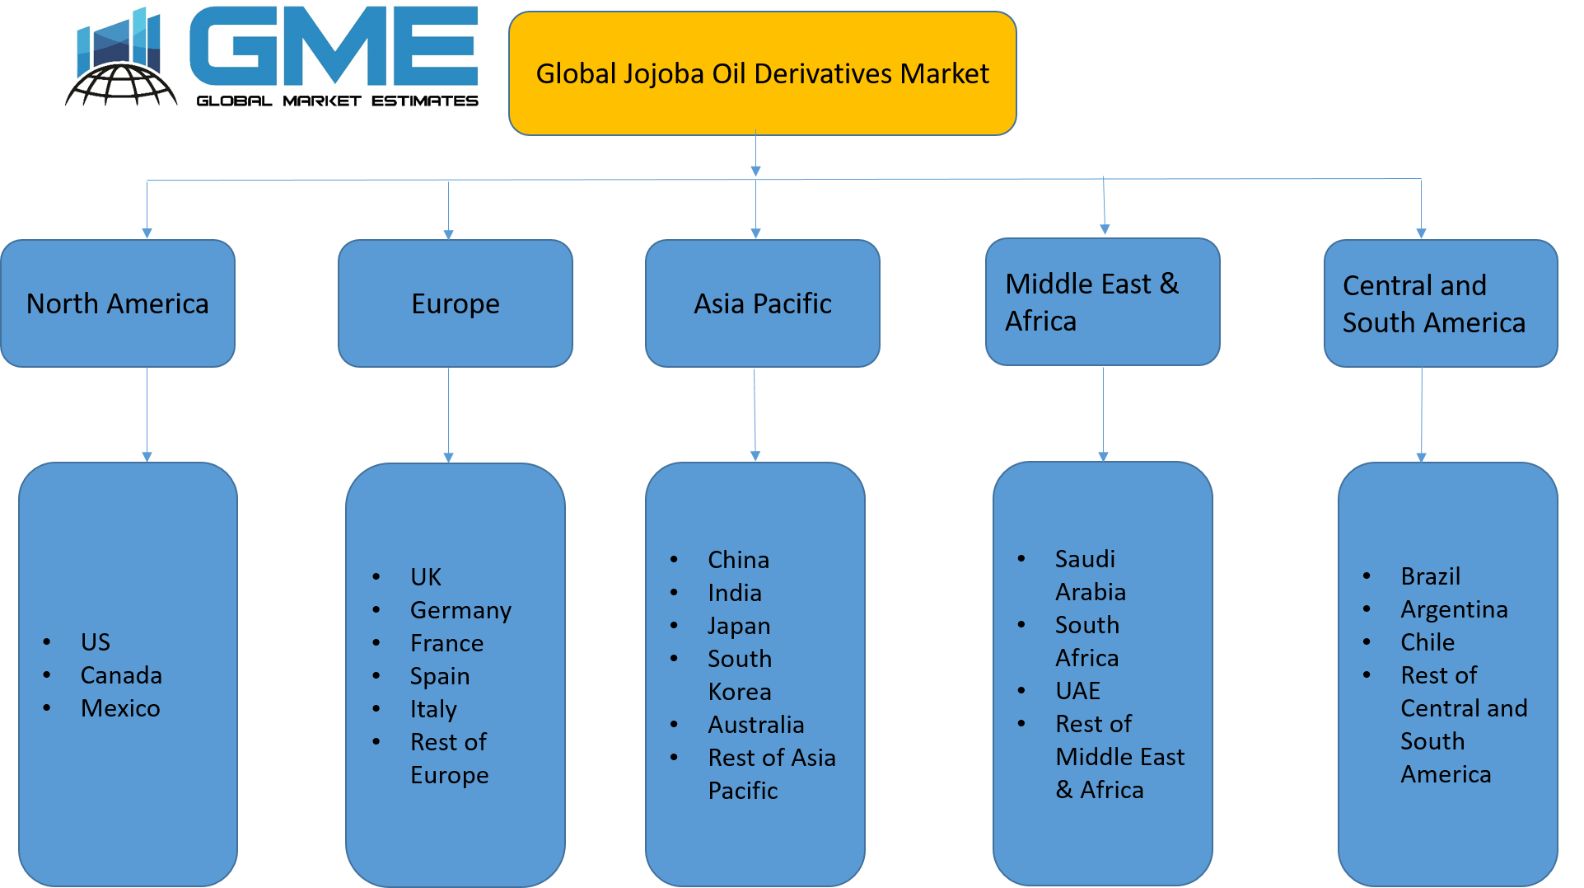 Global Jojoba Oil Derivatives Market - Regional Analysis